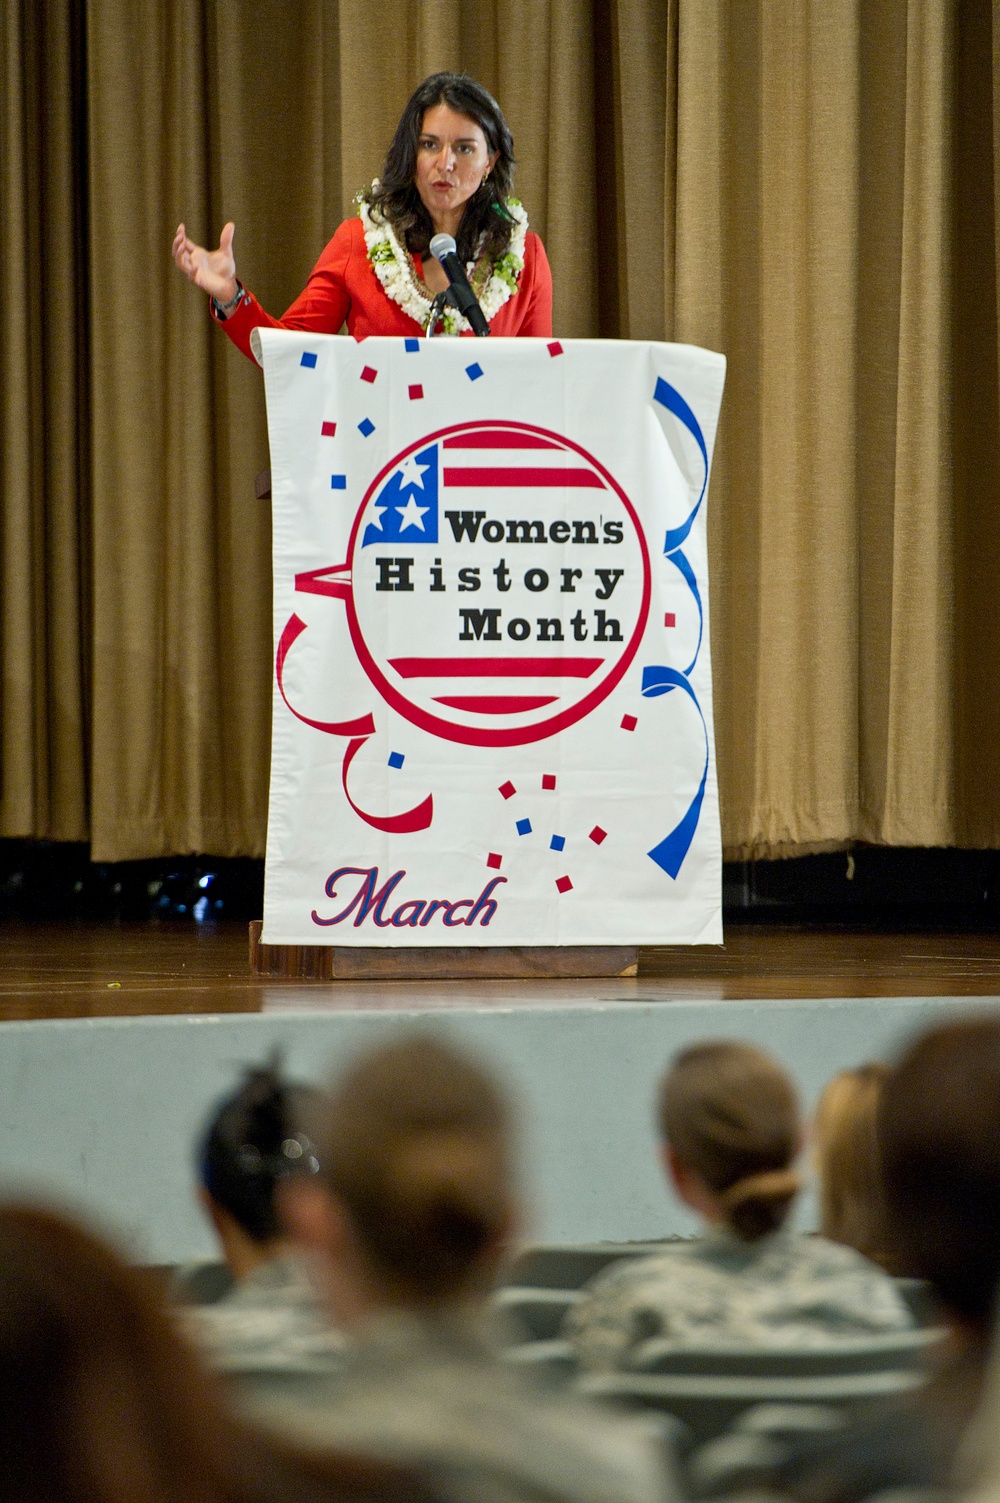 Hawaii Congresswoman Tulsi Gabbard inspires service members during womens history month seminar at JBPHH